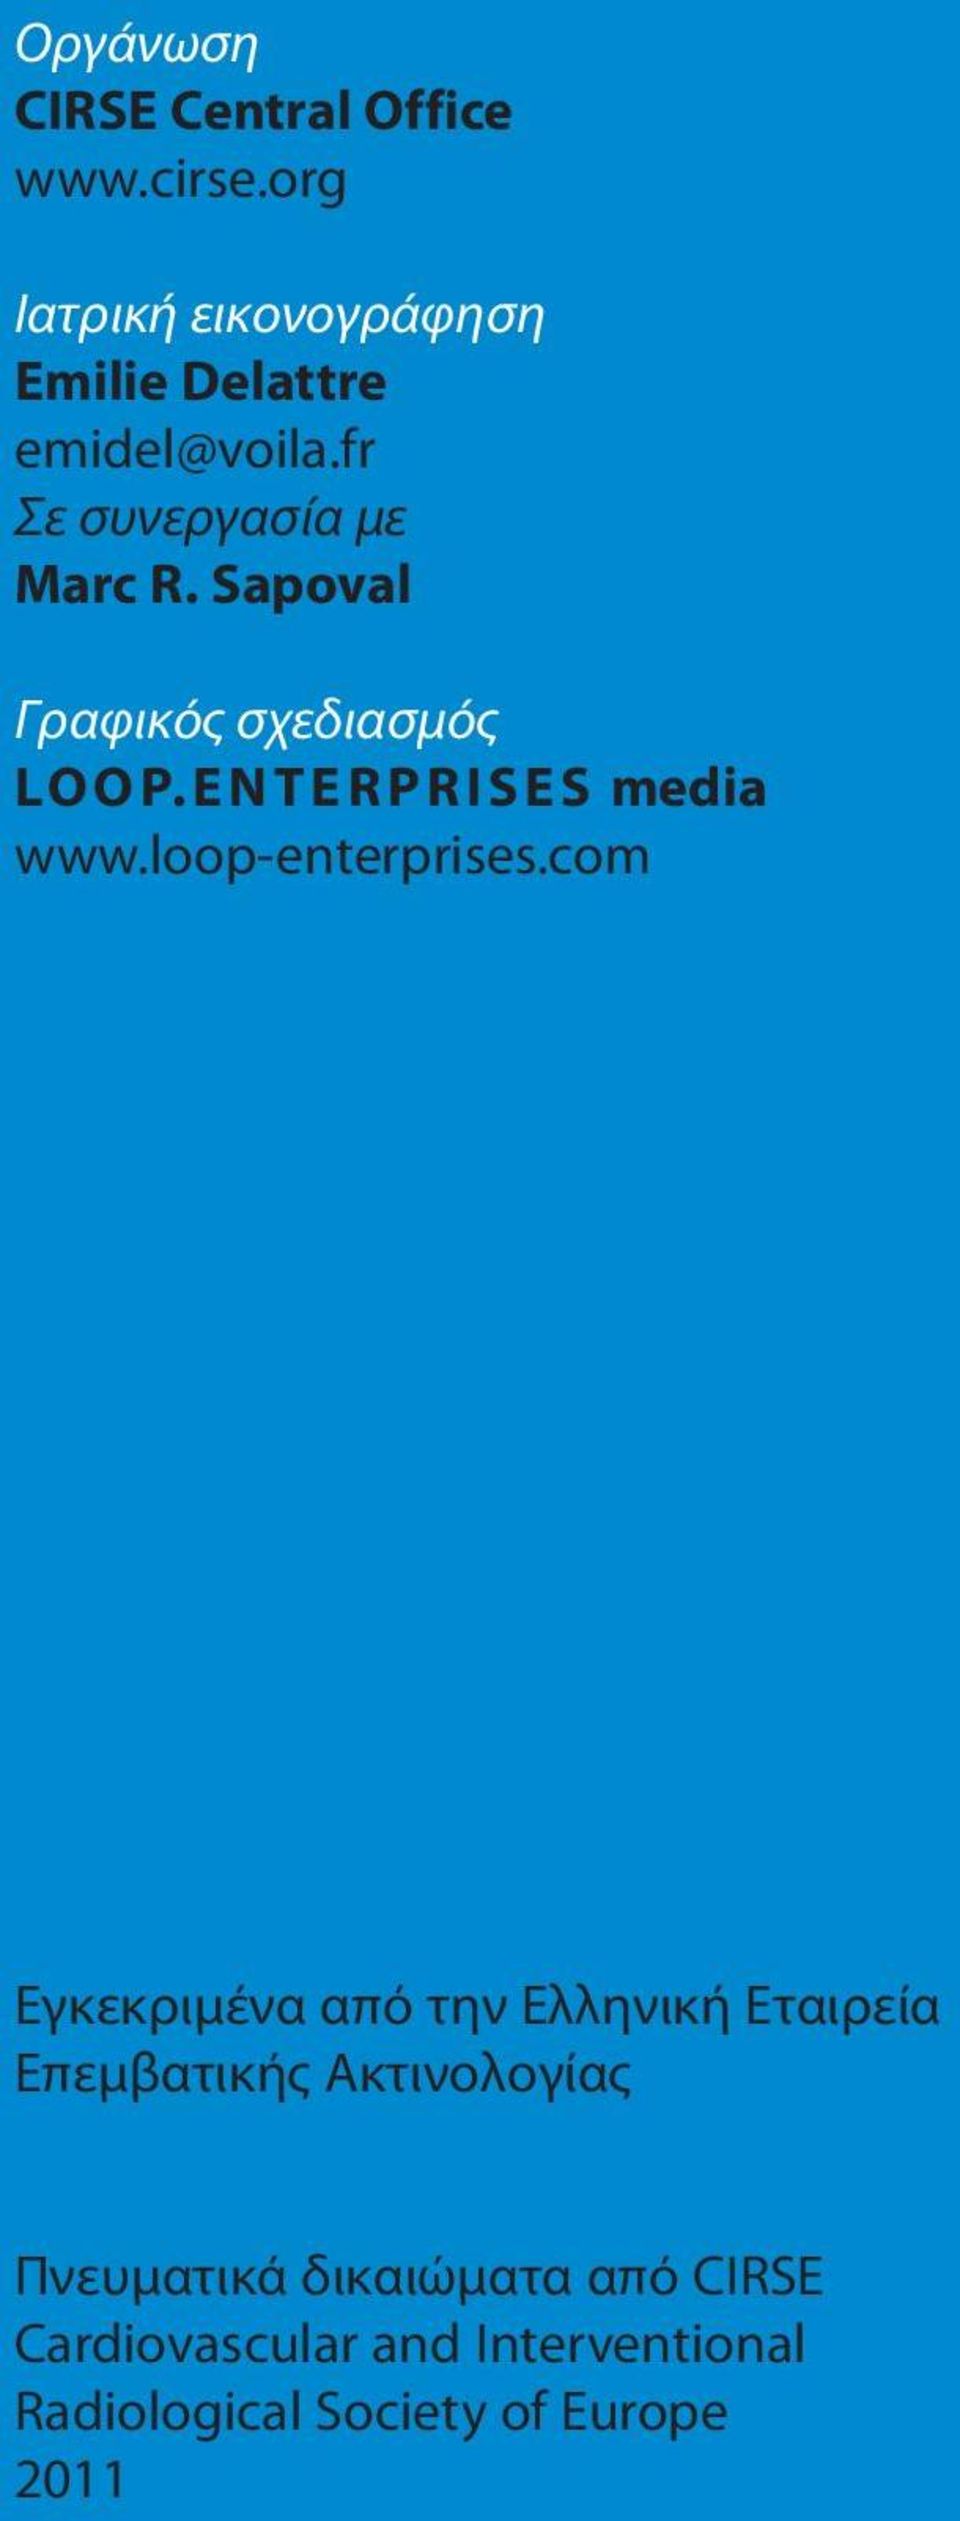 Sapoval Γραφικός σχεδιασμός LOOP.ENTERPRISES media www.loop-enterprises.